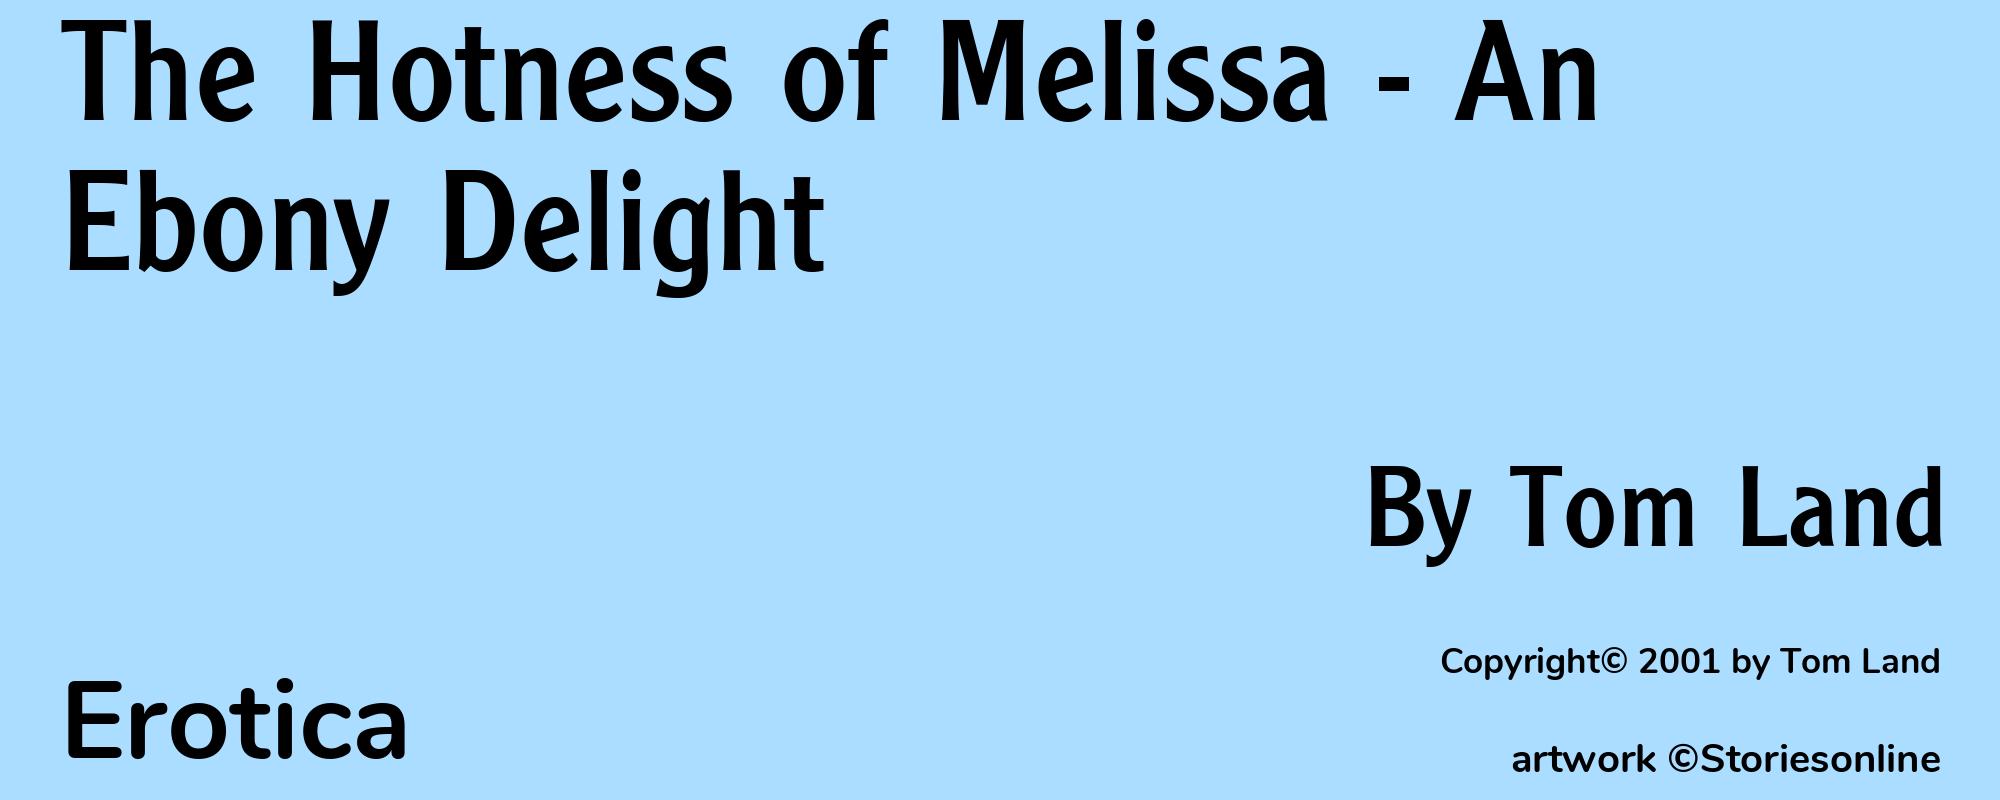 The Hotness of Melissa - An Ebony Delight - Cover